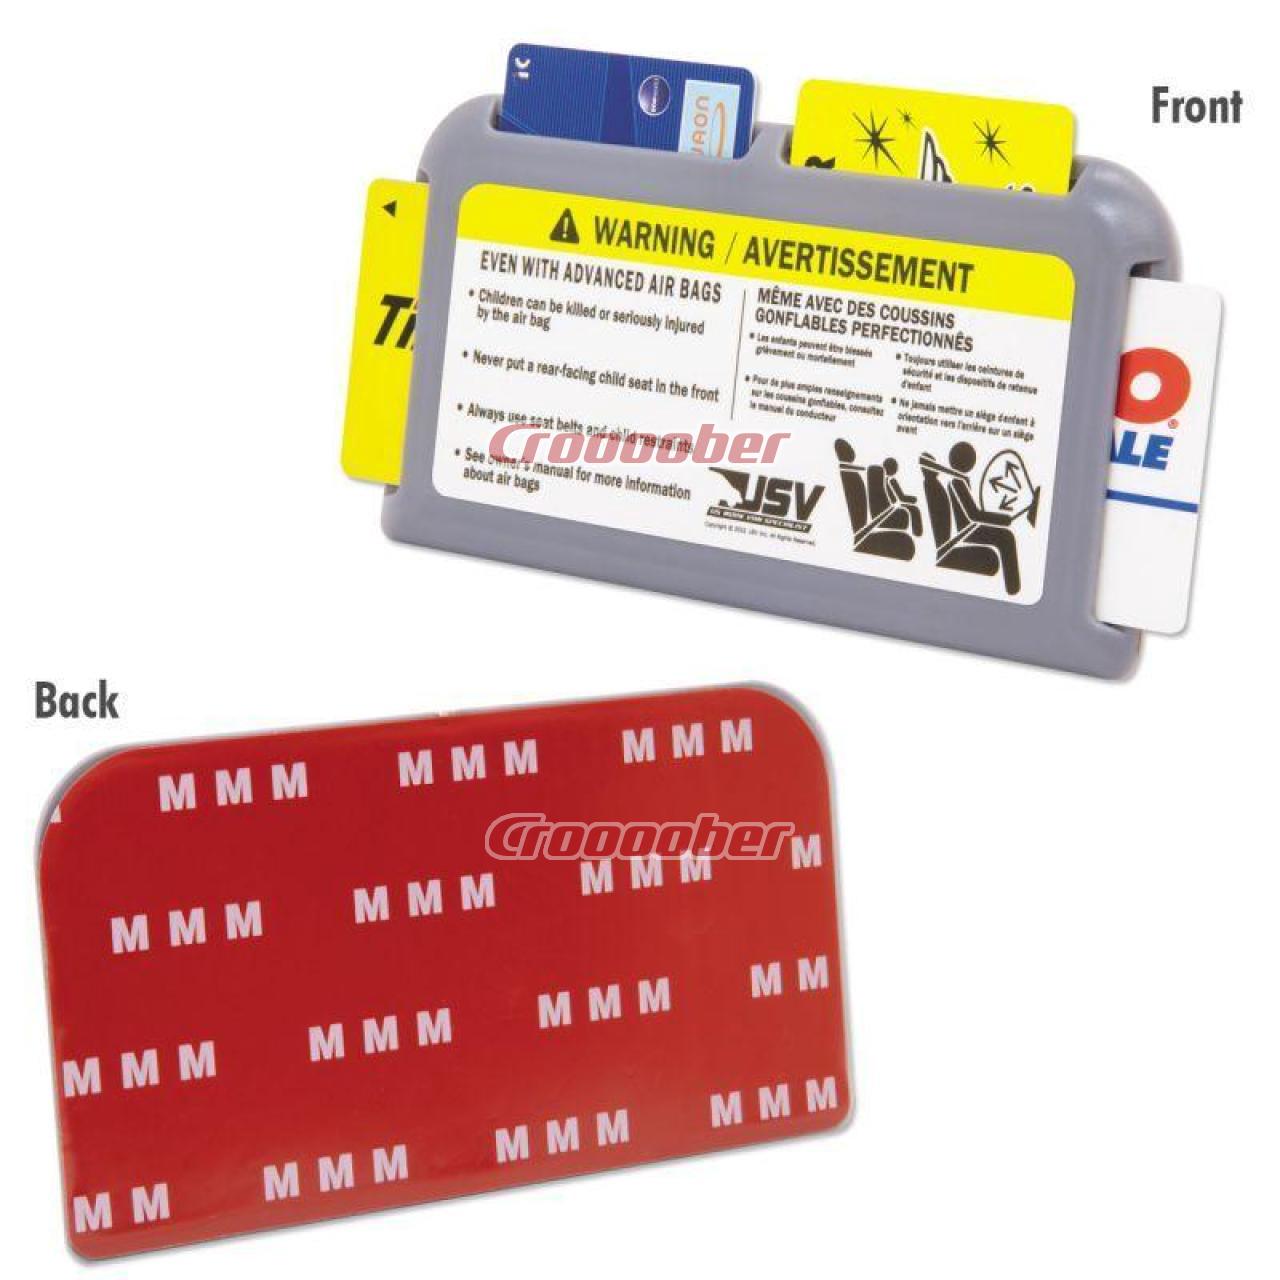 KG206GY] USV Caution Card Holder GY | Accessories | Croooober